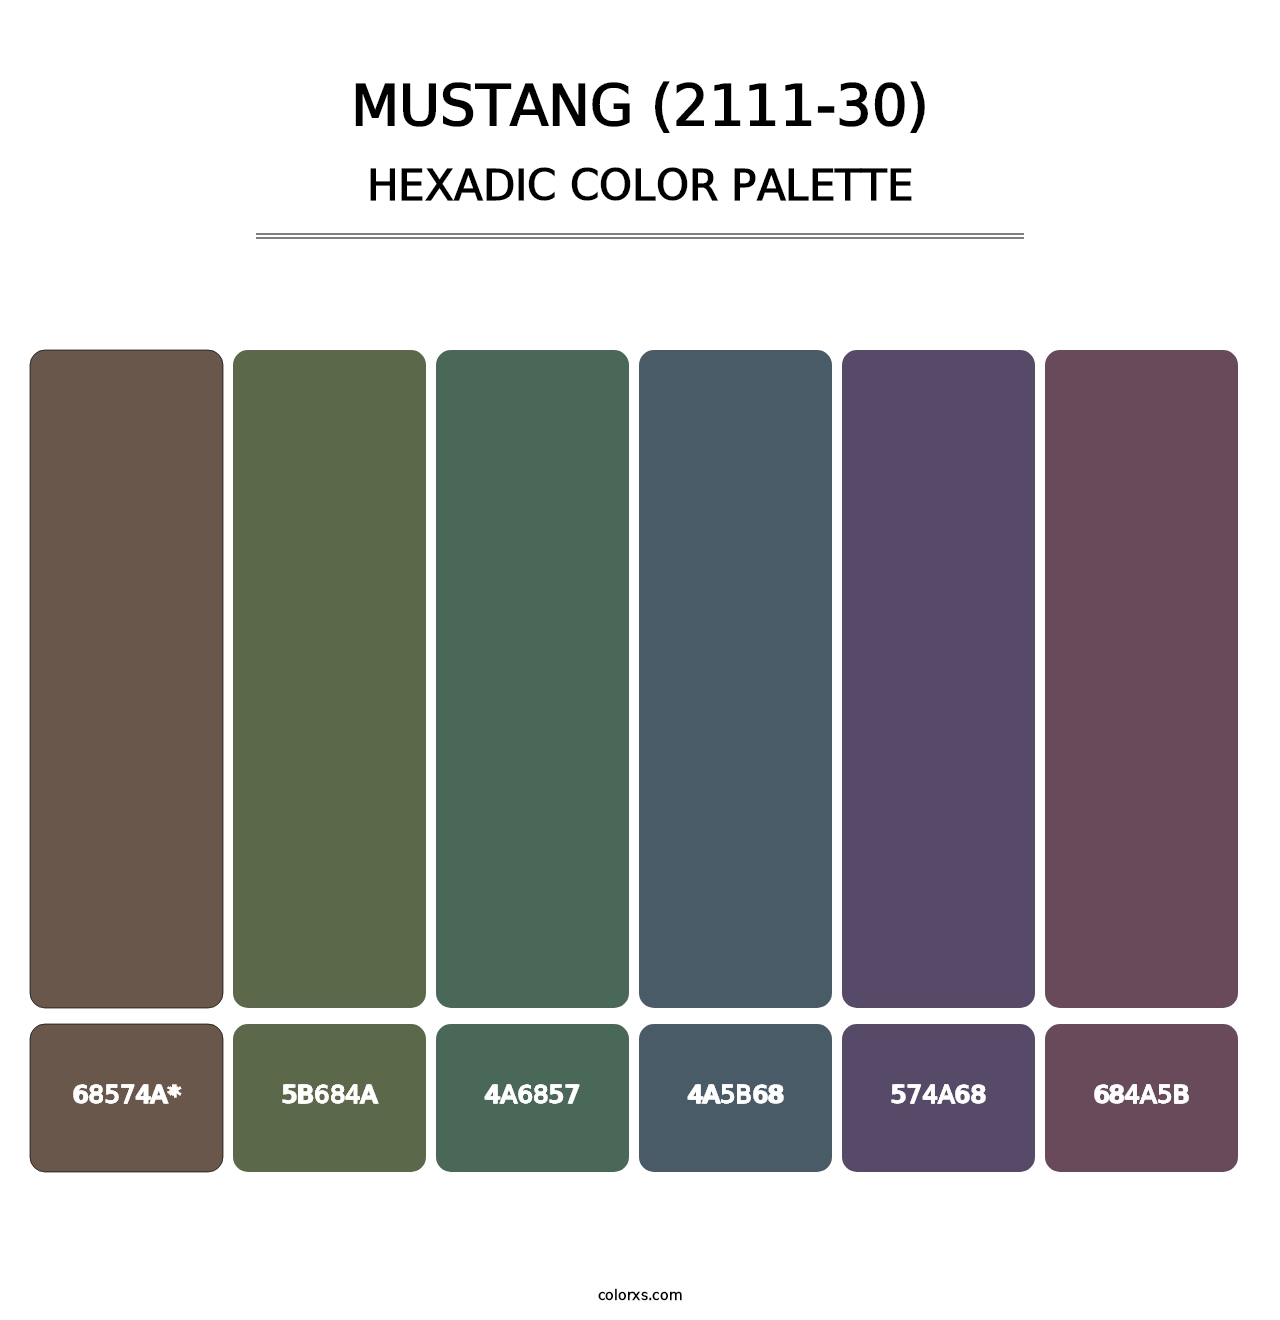 Mustang (2111-30) - Hexadic Color Palette